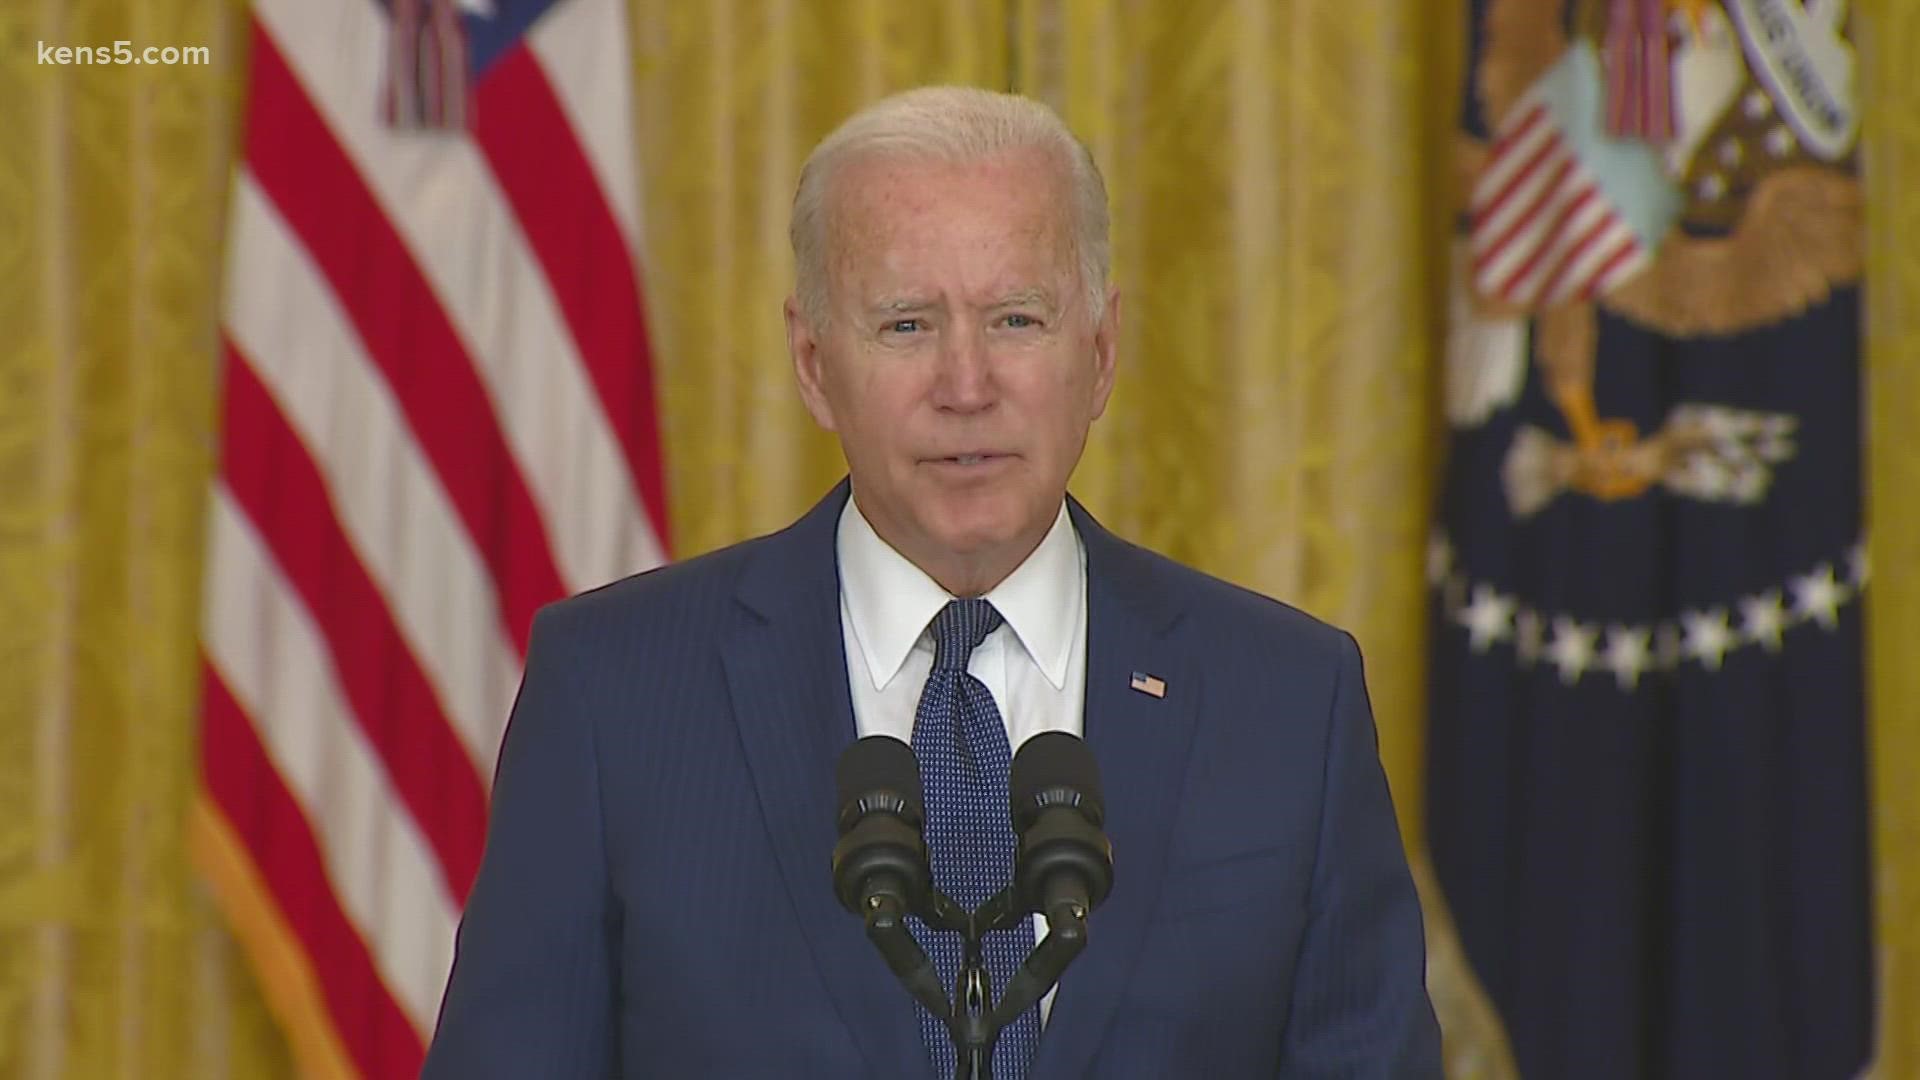 President Biden said Thursday that the military will retaliate against ISIS for Thursday's attack.